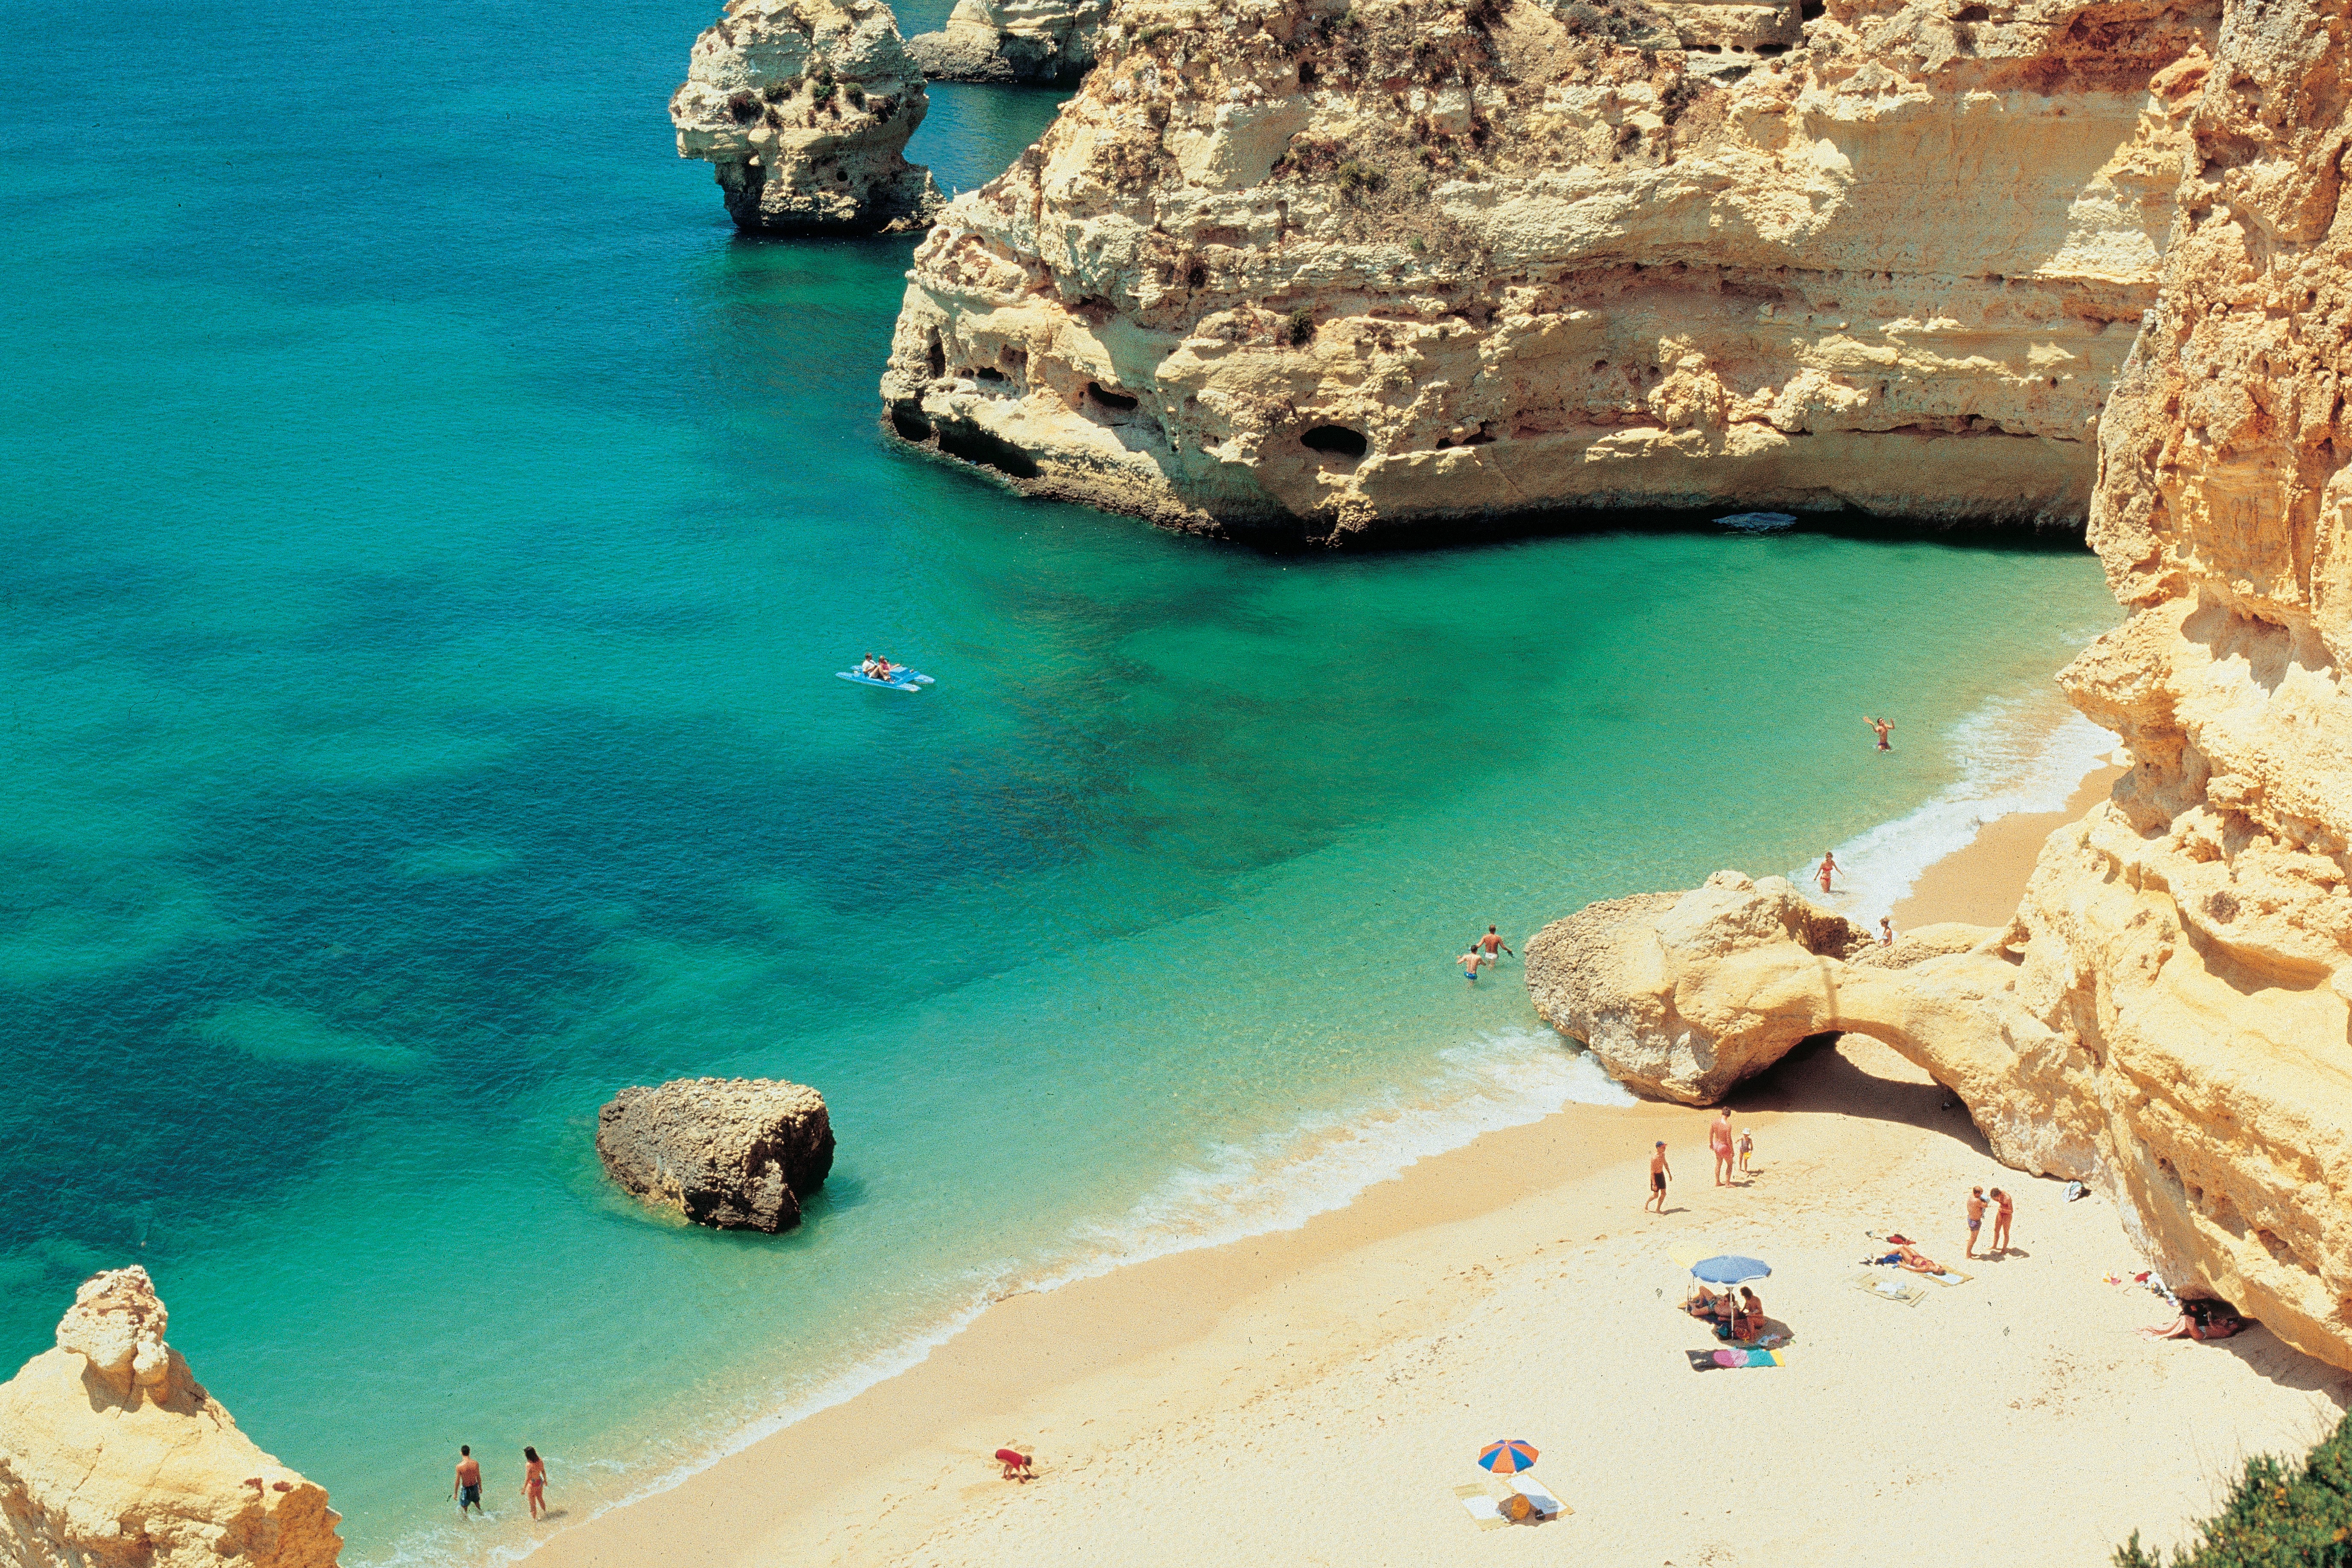 A beach in Portugal's Algarve